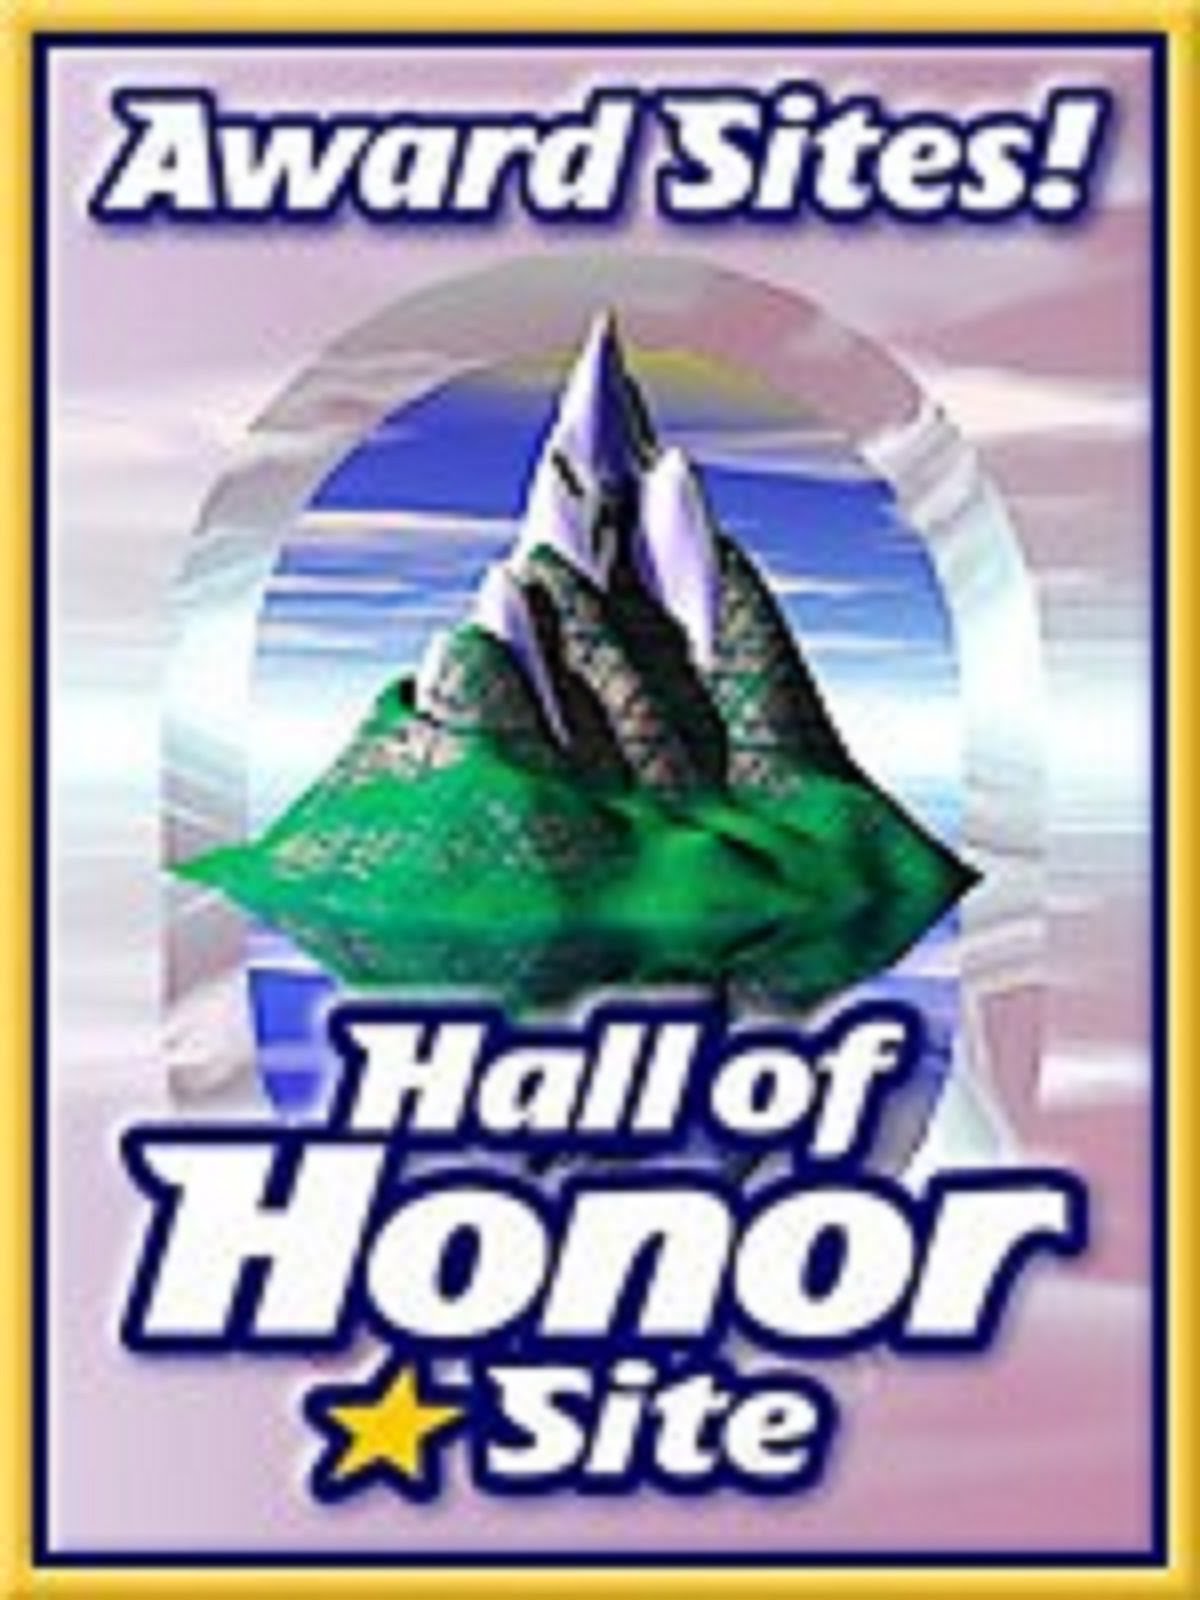 HALL OF HONOR AWARD SITE FULL BADGE